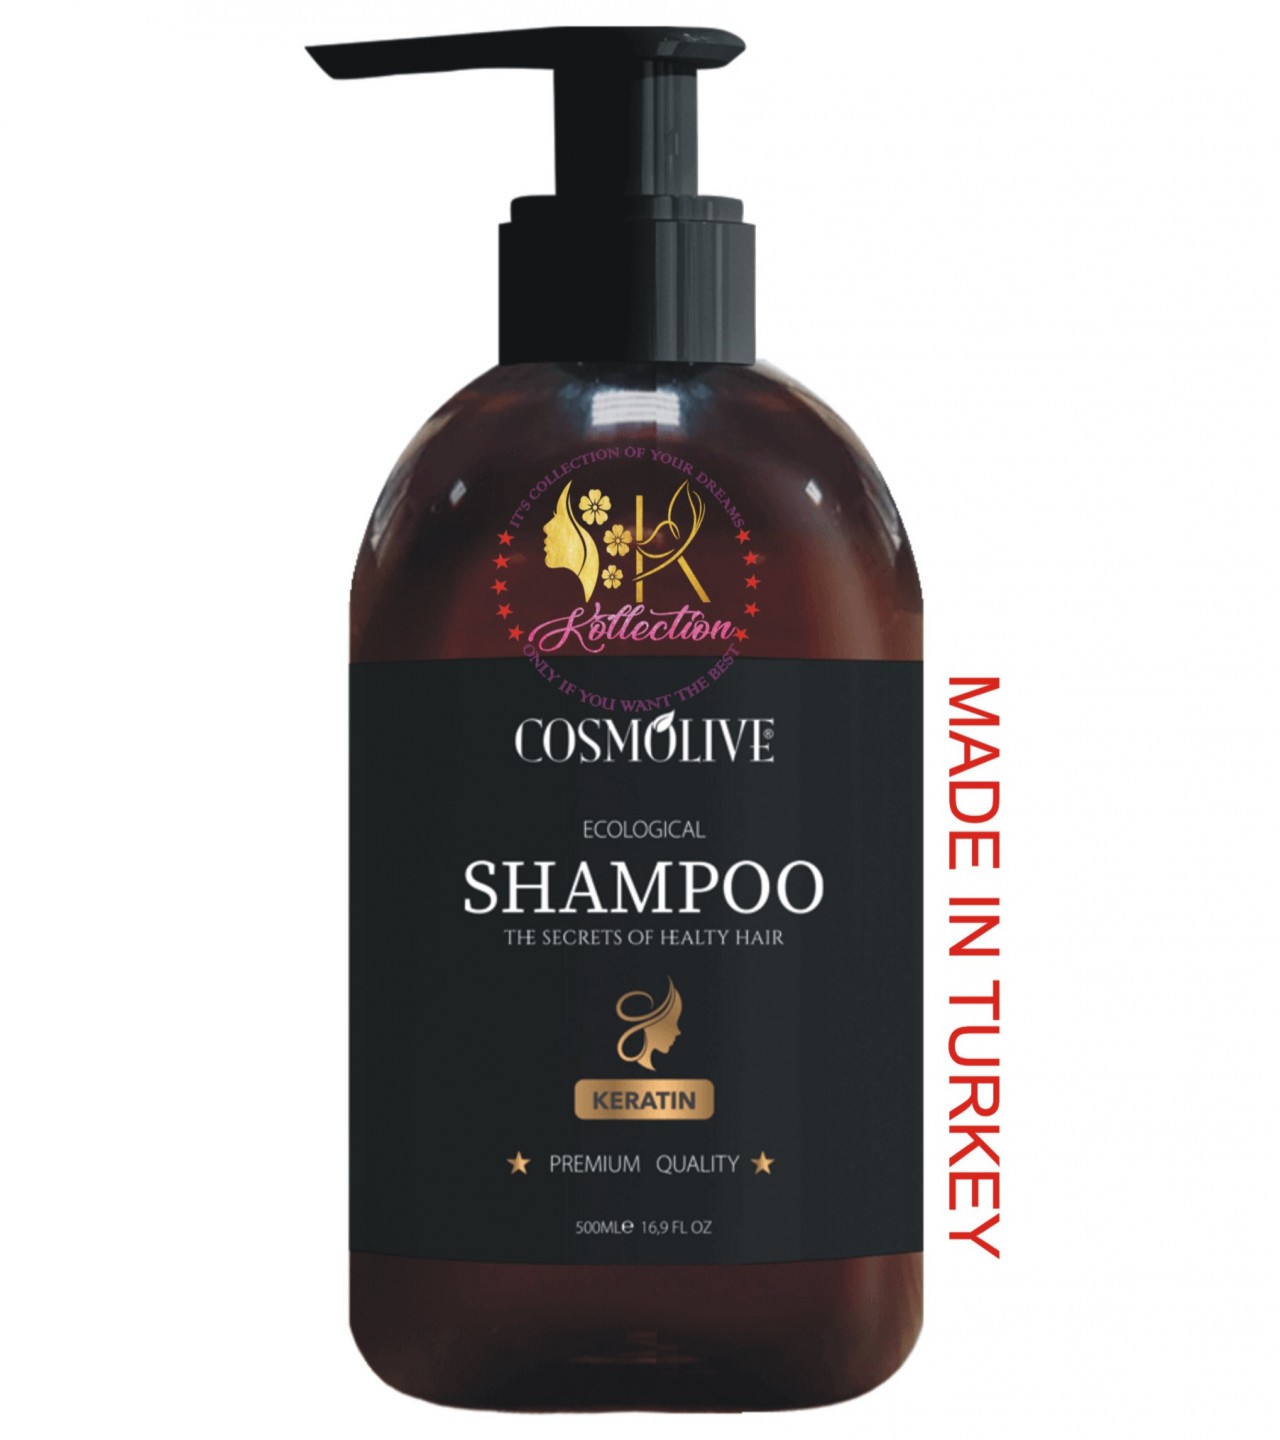 Cosmolive Karatin Shampoo - 500ML - Made in Turkey - Imported